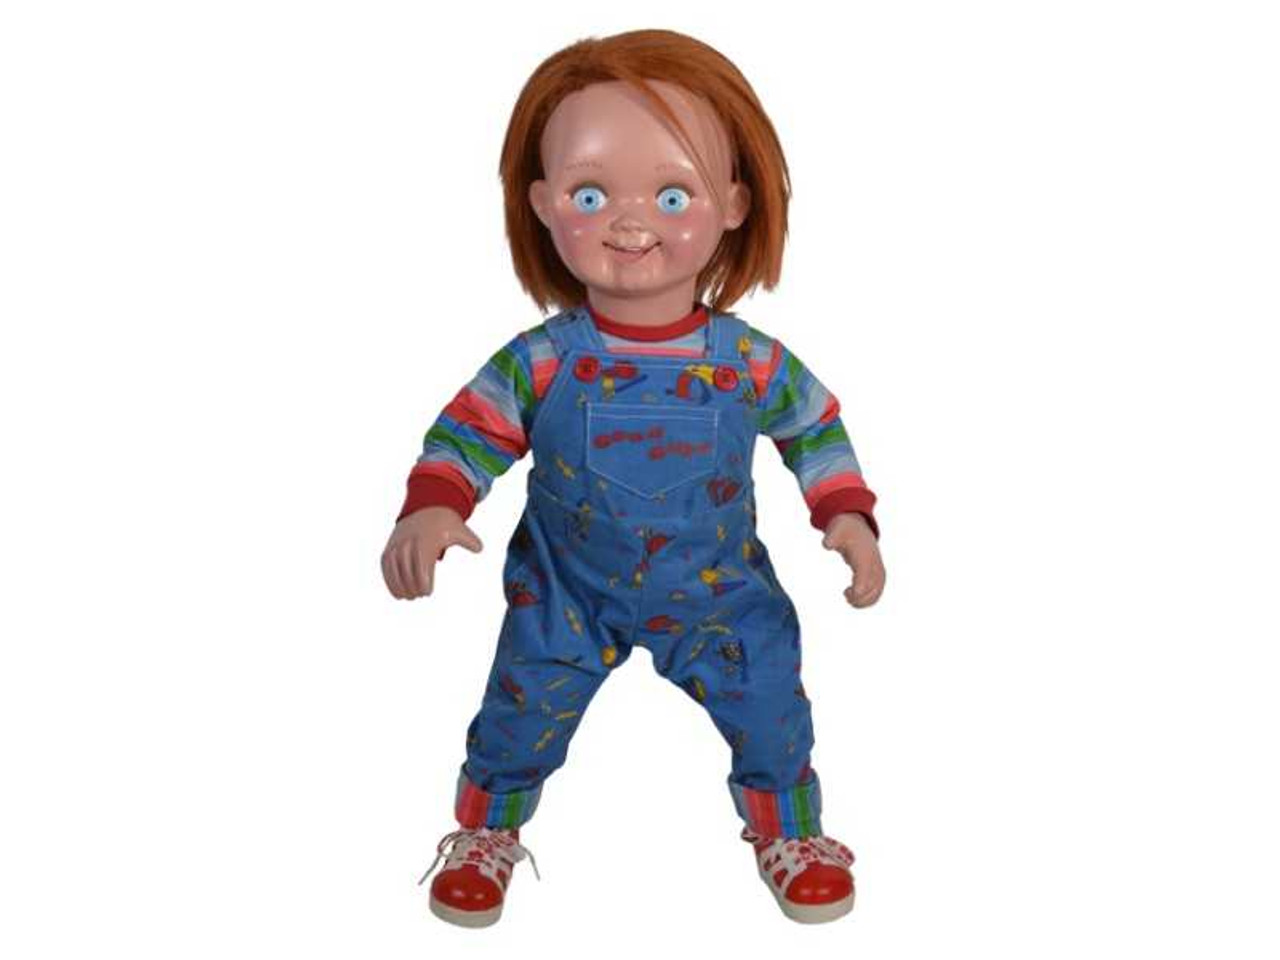 Child's Play Chucky Doll